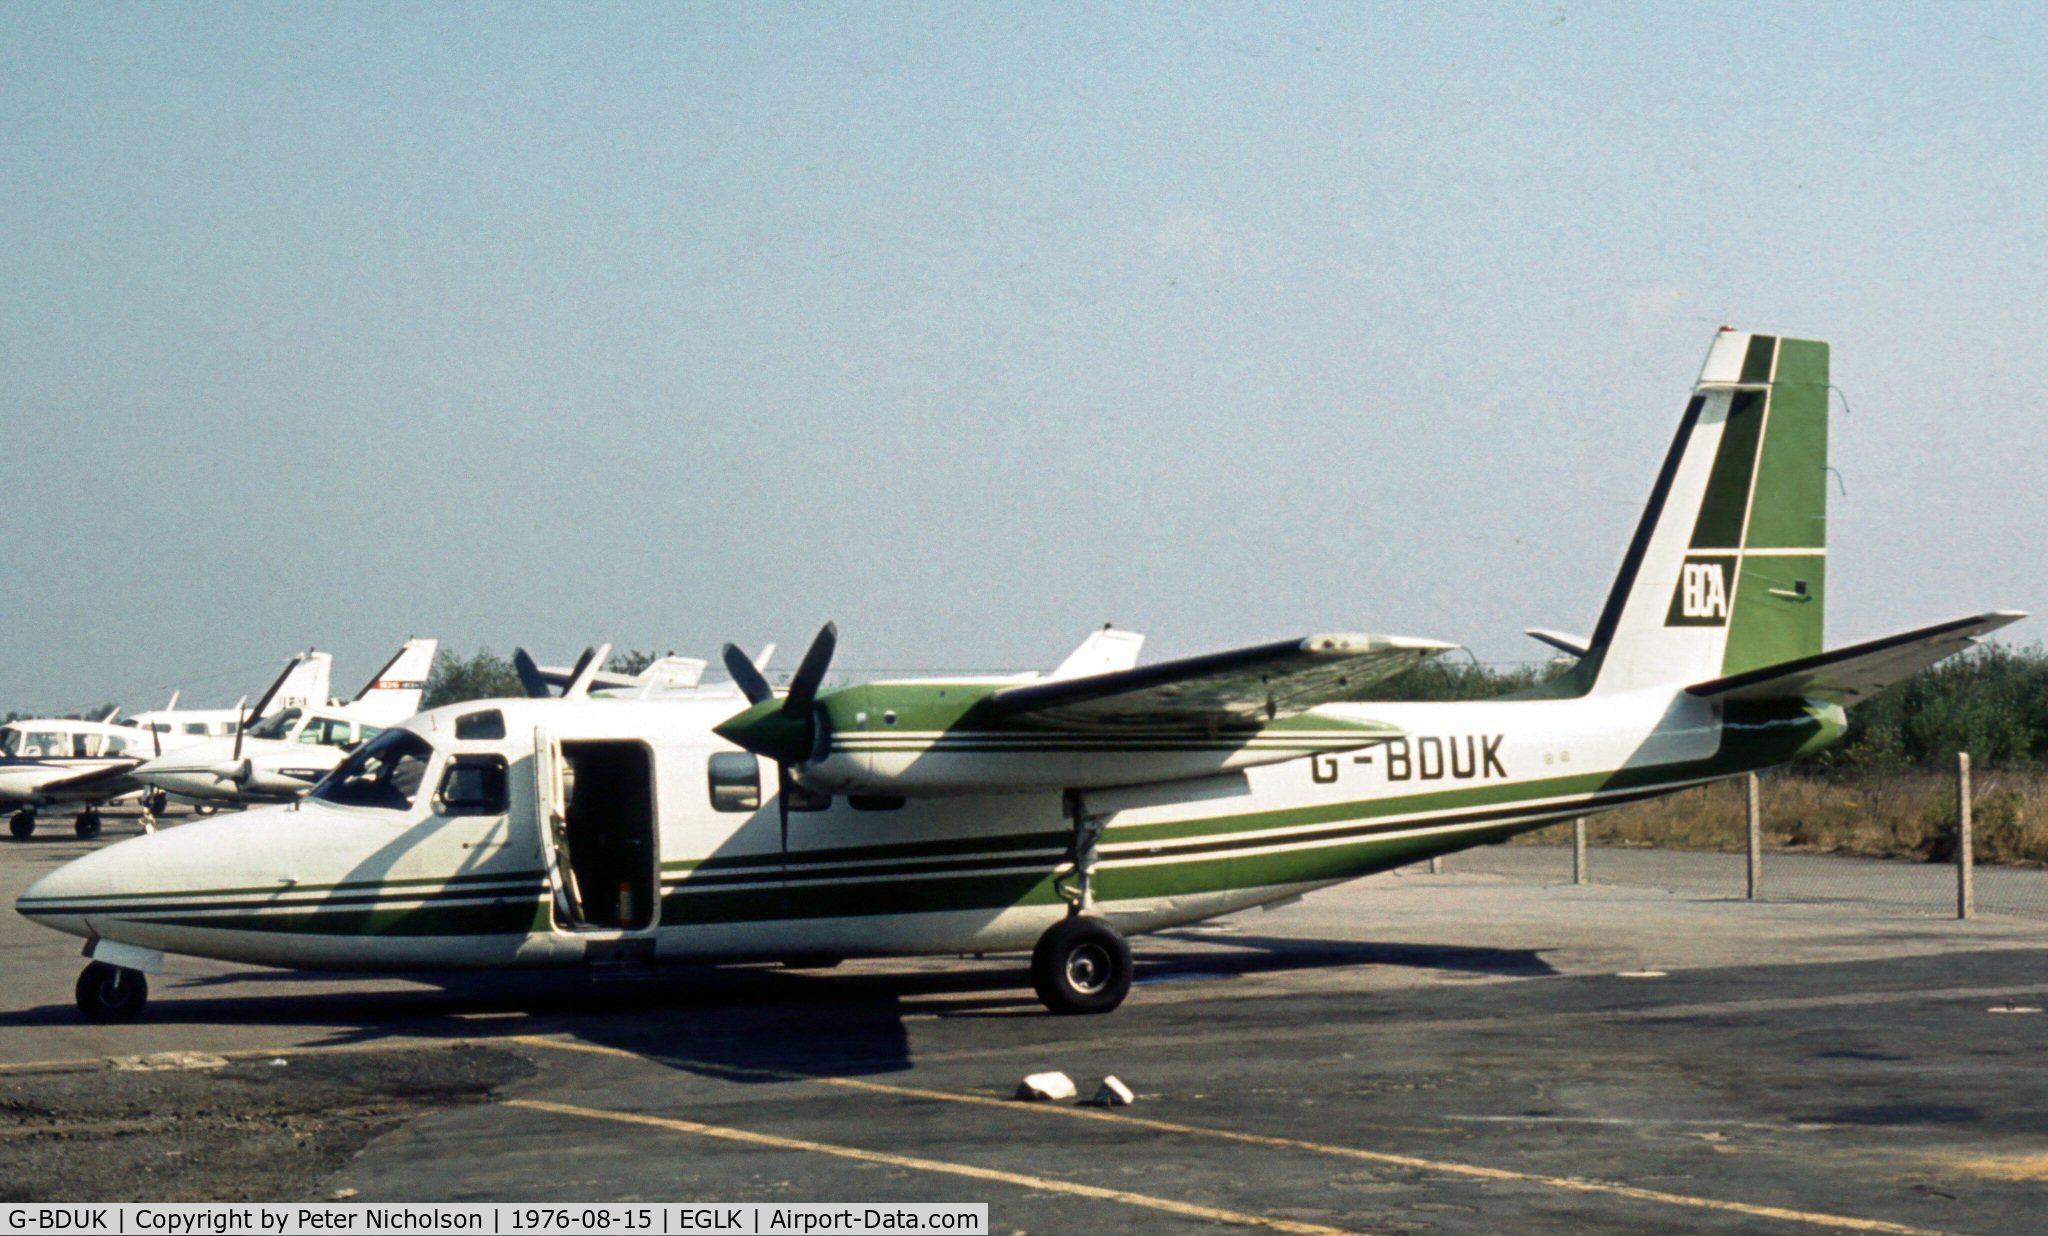 G-BDUK, 1973 Rockwell Commander 685 C/N 12029, Turbo Commander 685 seen at the 1976 Blackbushe Fly-In.